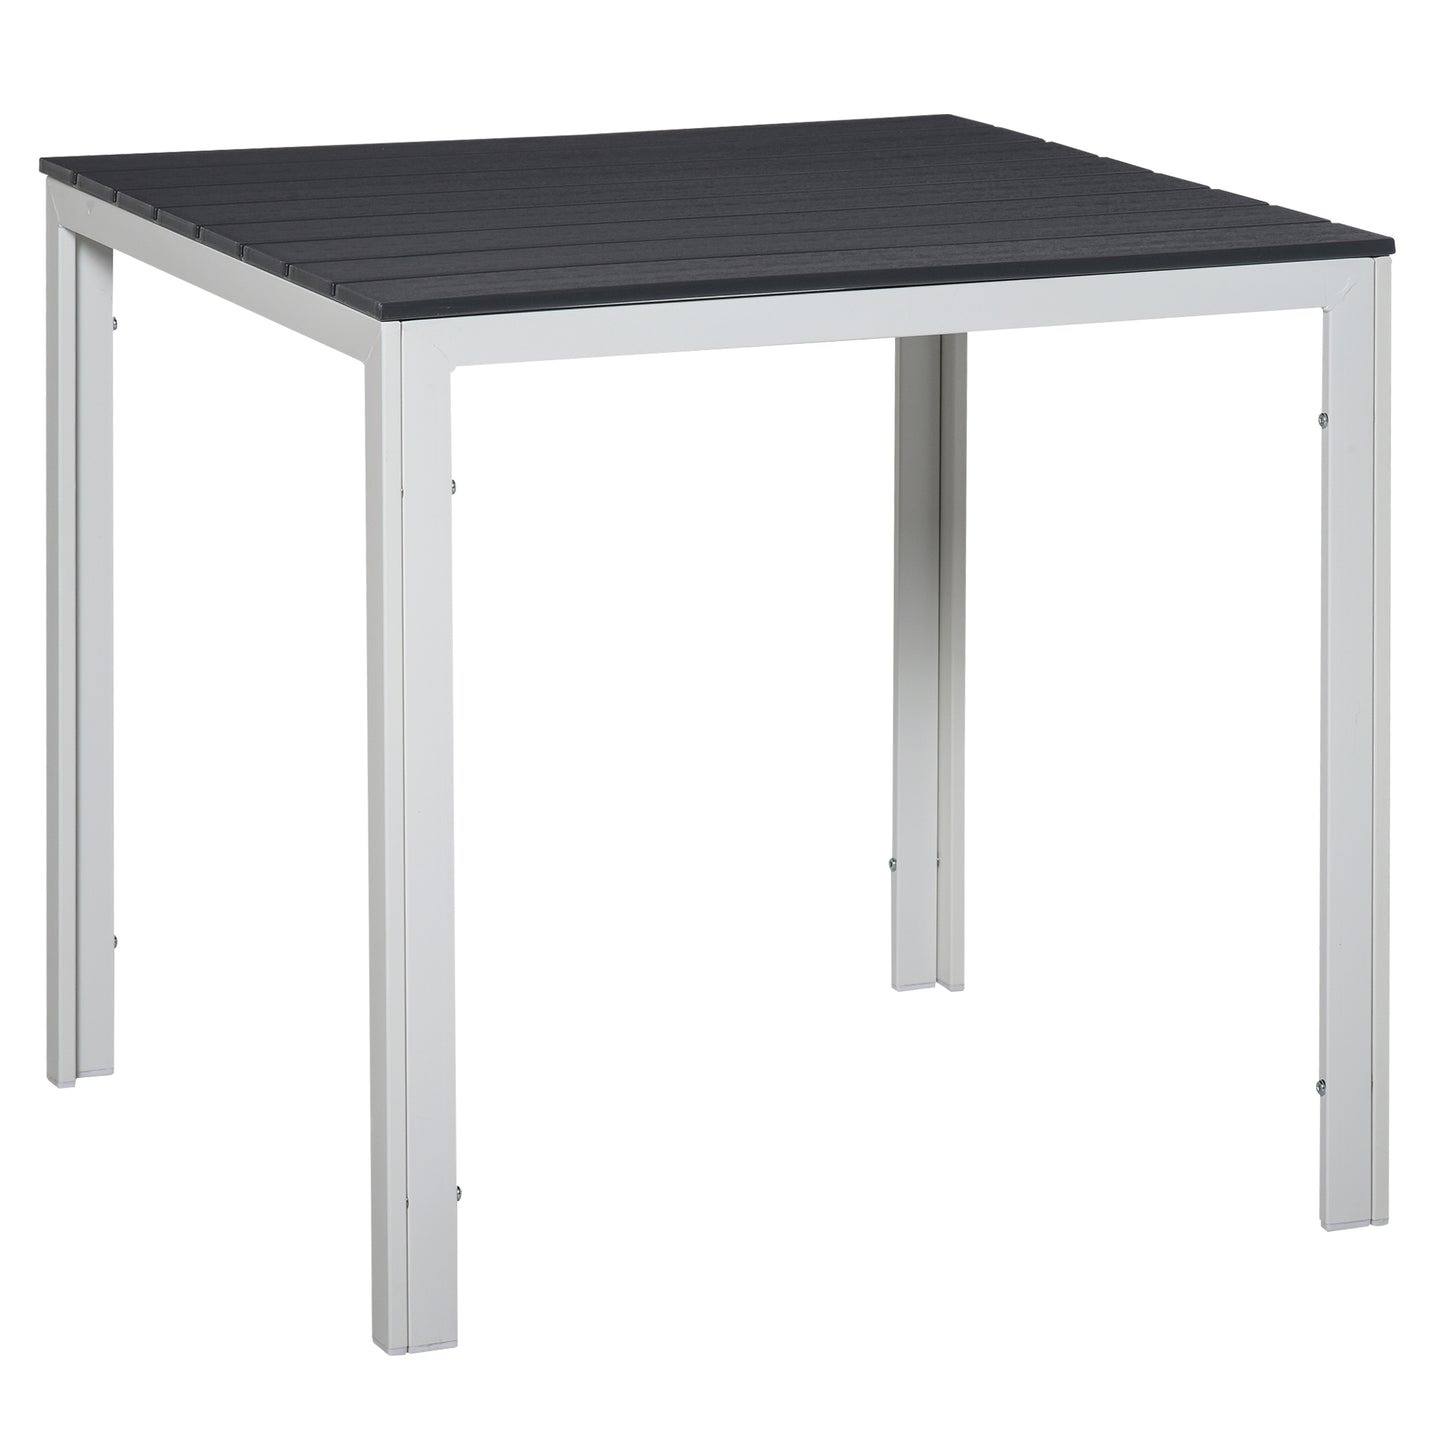 Outsunny Patio Garden Square Metal Table w/ PE Surface, for Porches, Backyards, Dark Grey